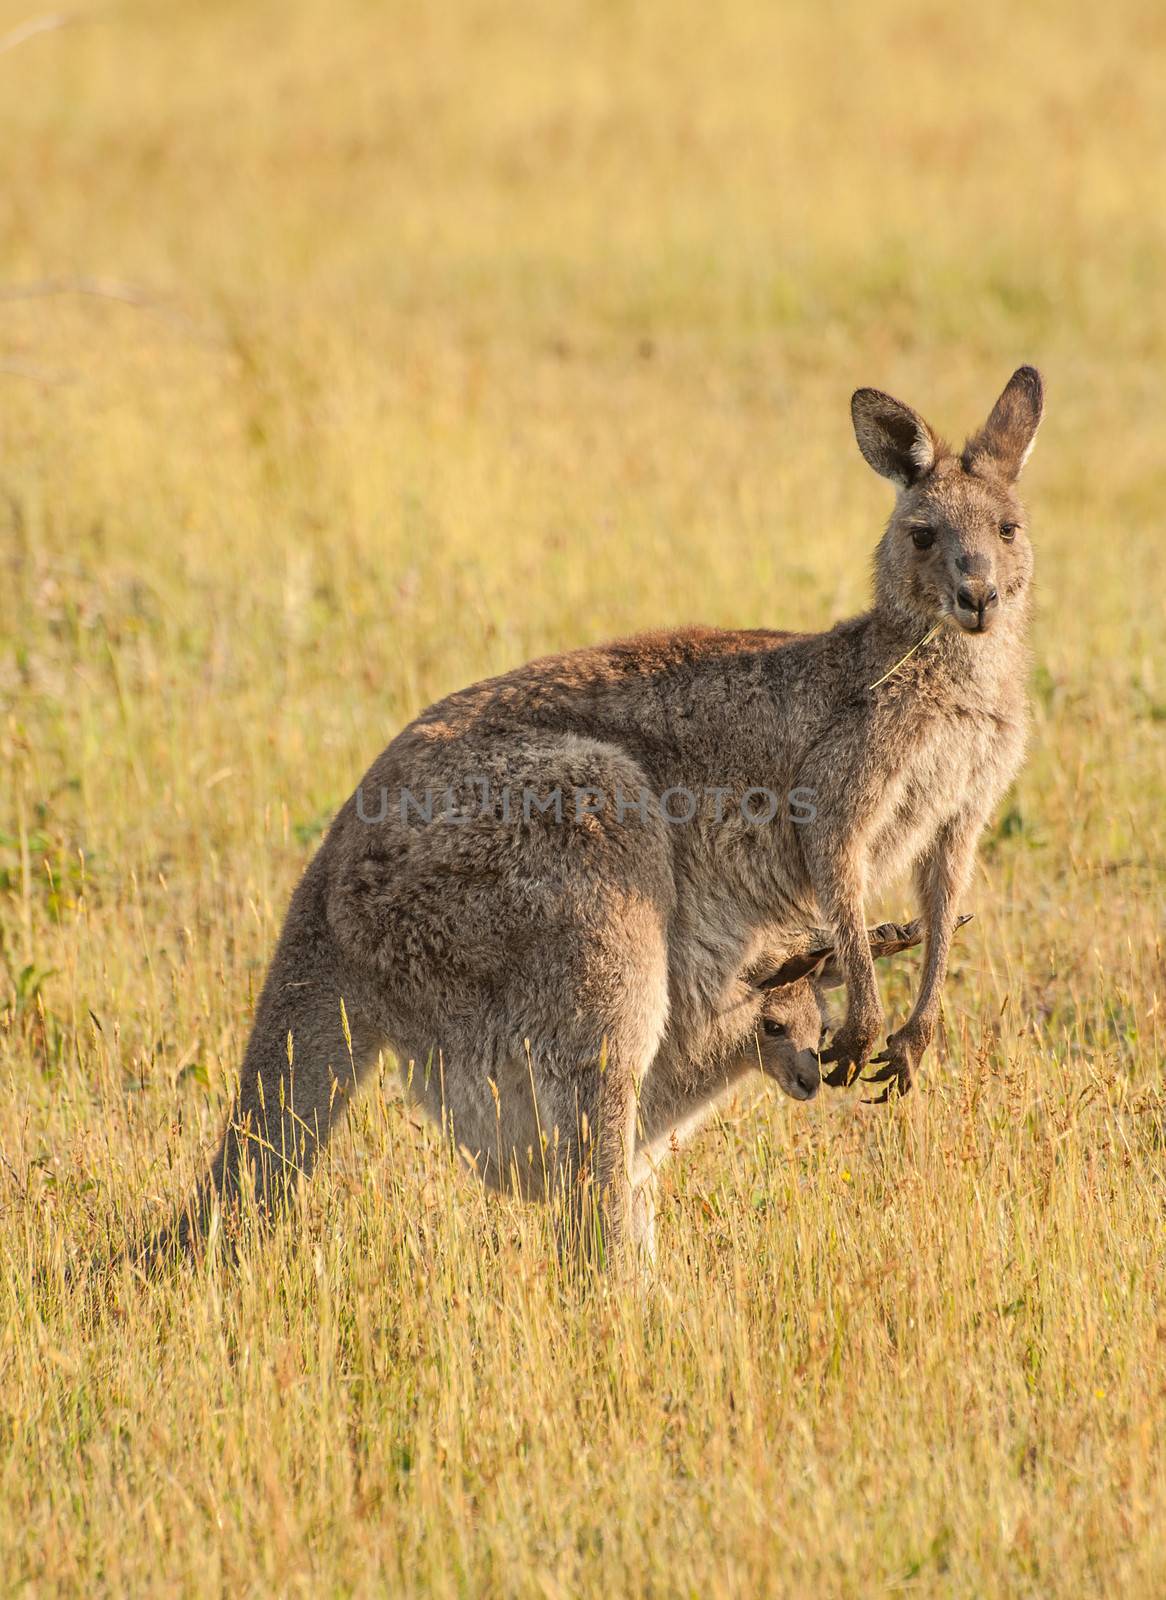 Wild Australian female kangaroo (eastern gray kangaroo - Macropus giganteus) with a joey in pouch